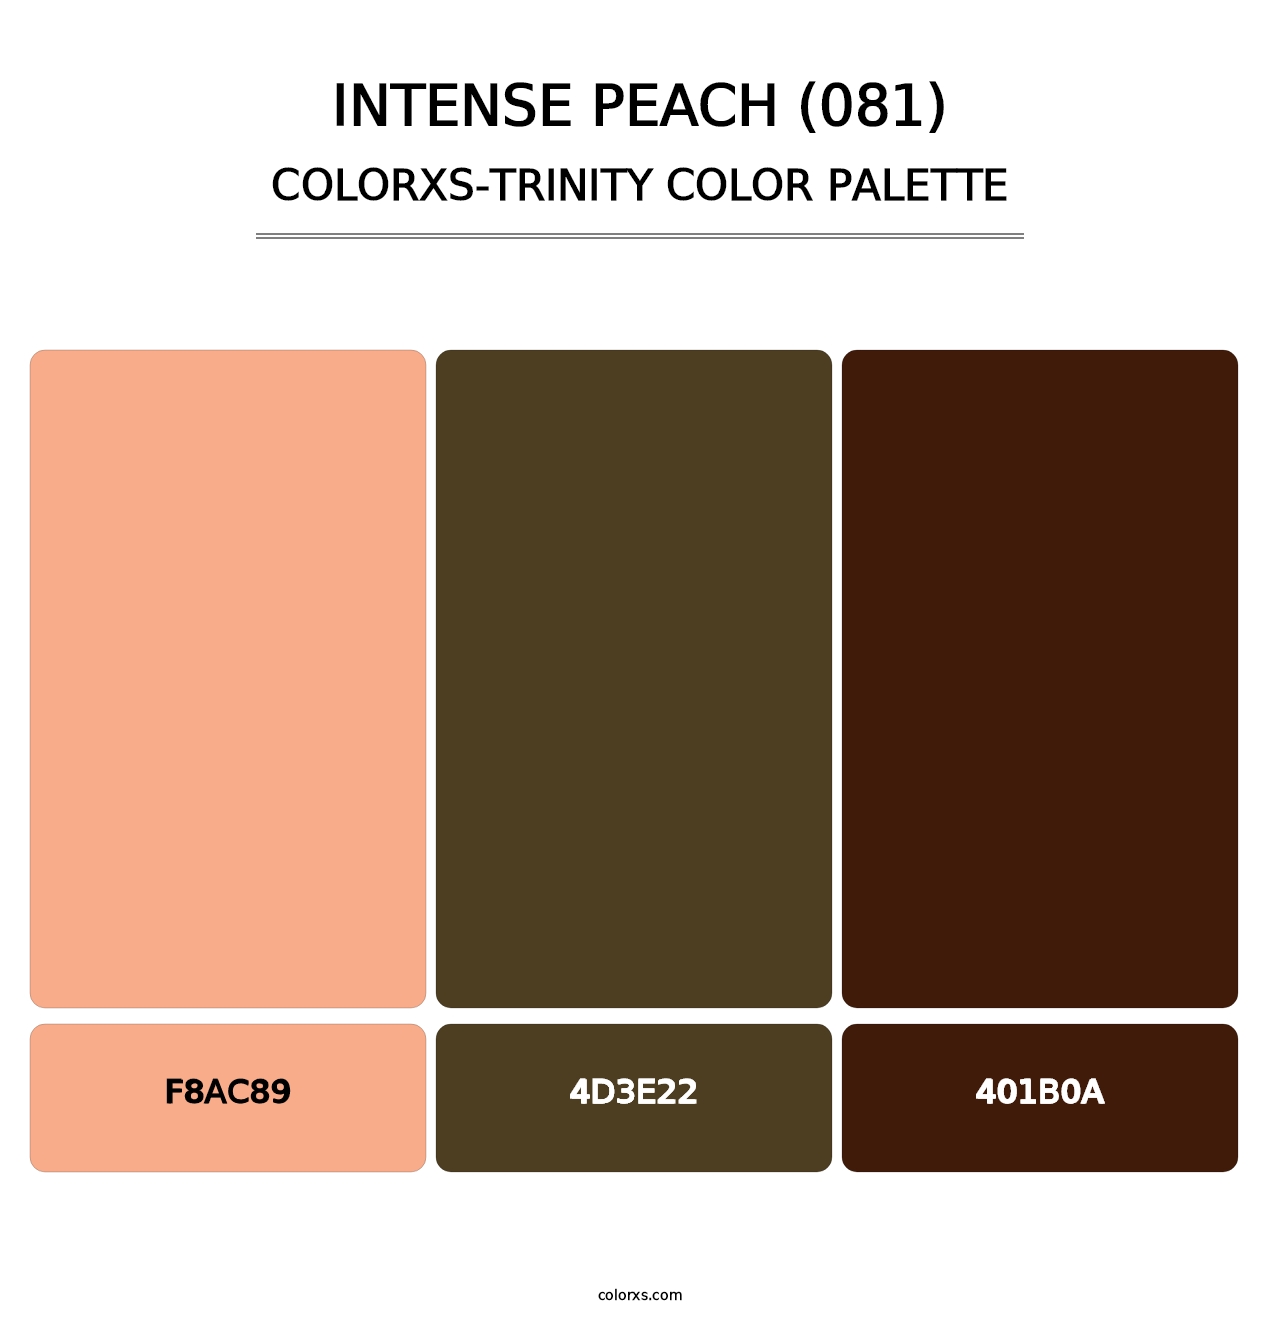 Intense Peach (081) - Colorxs Trinity Palette